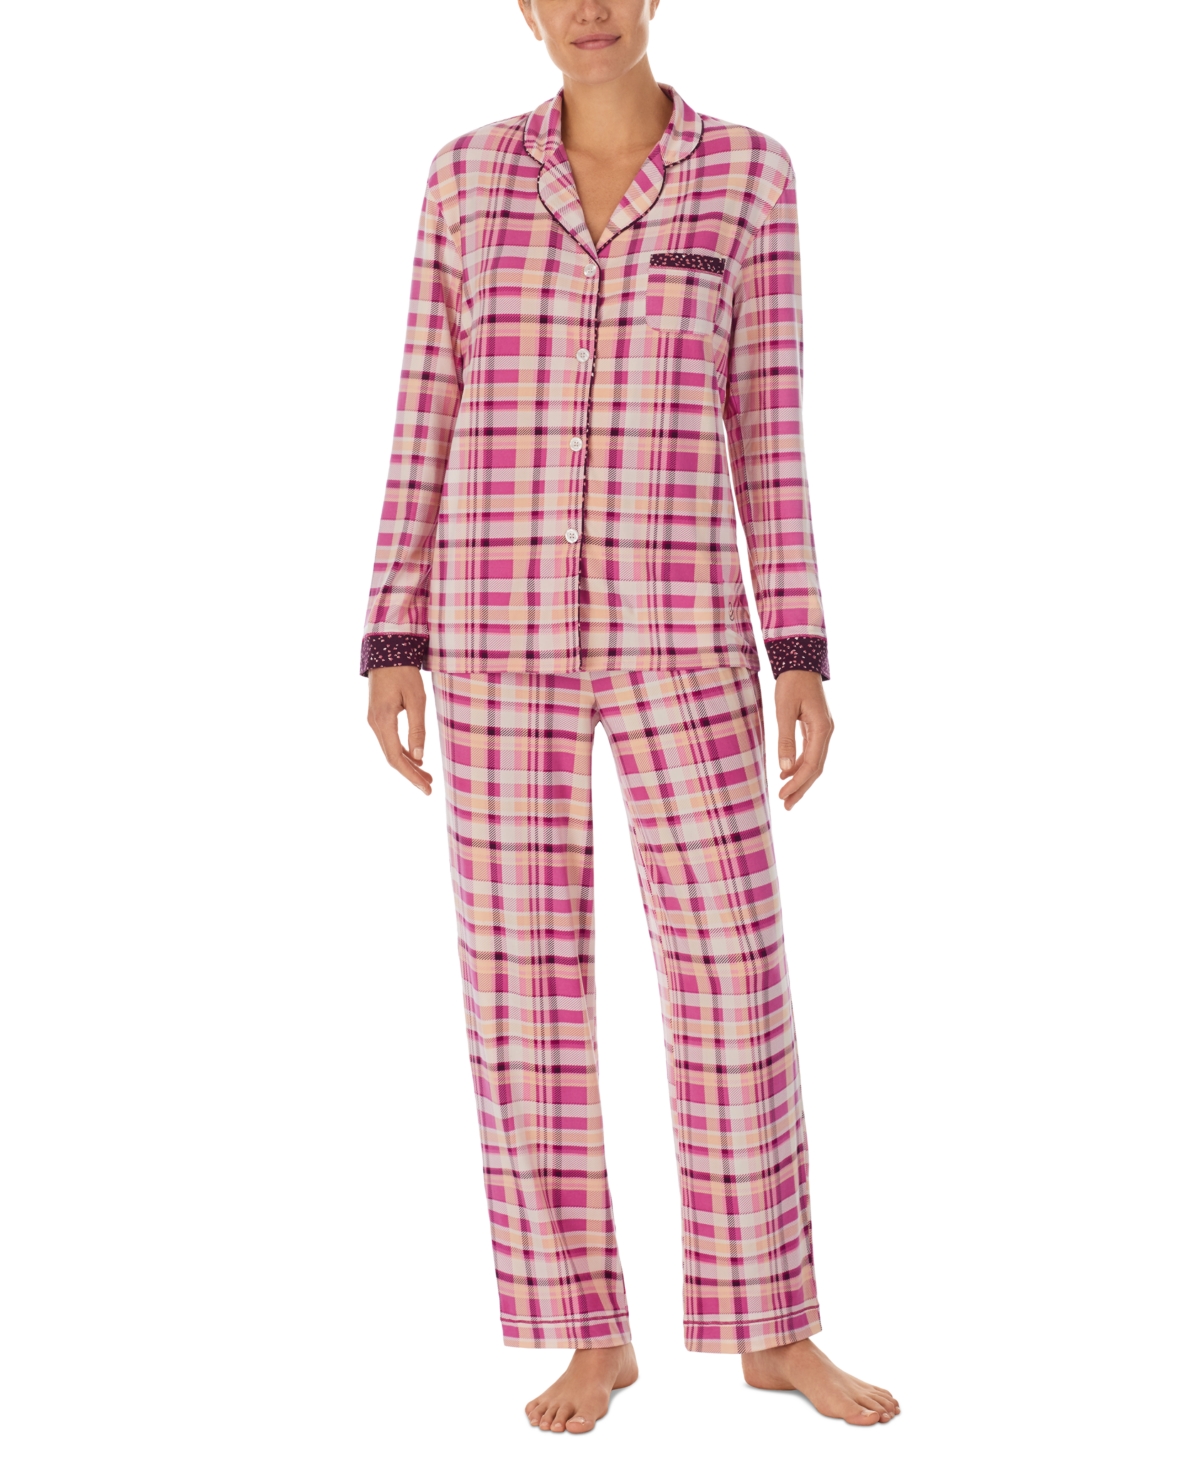 Women's Printed Notched-Collar Pajamas Set - Pink Plaid